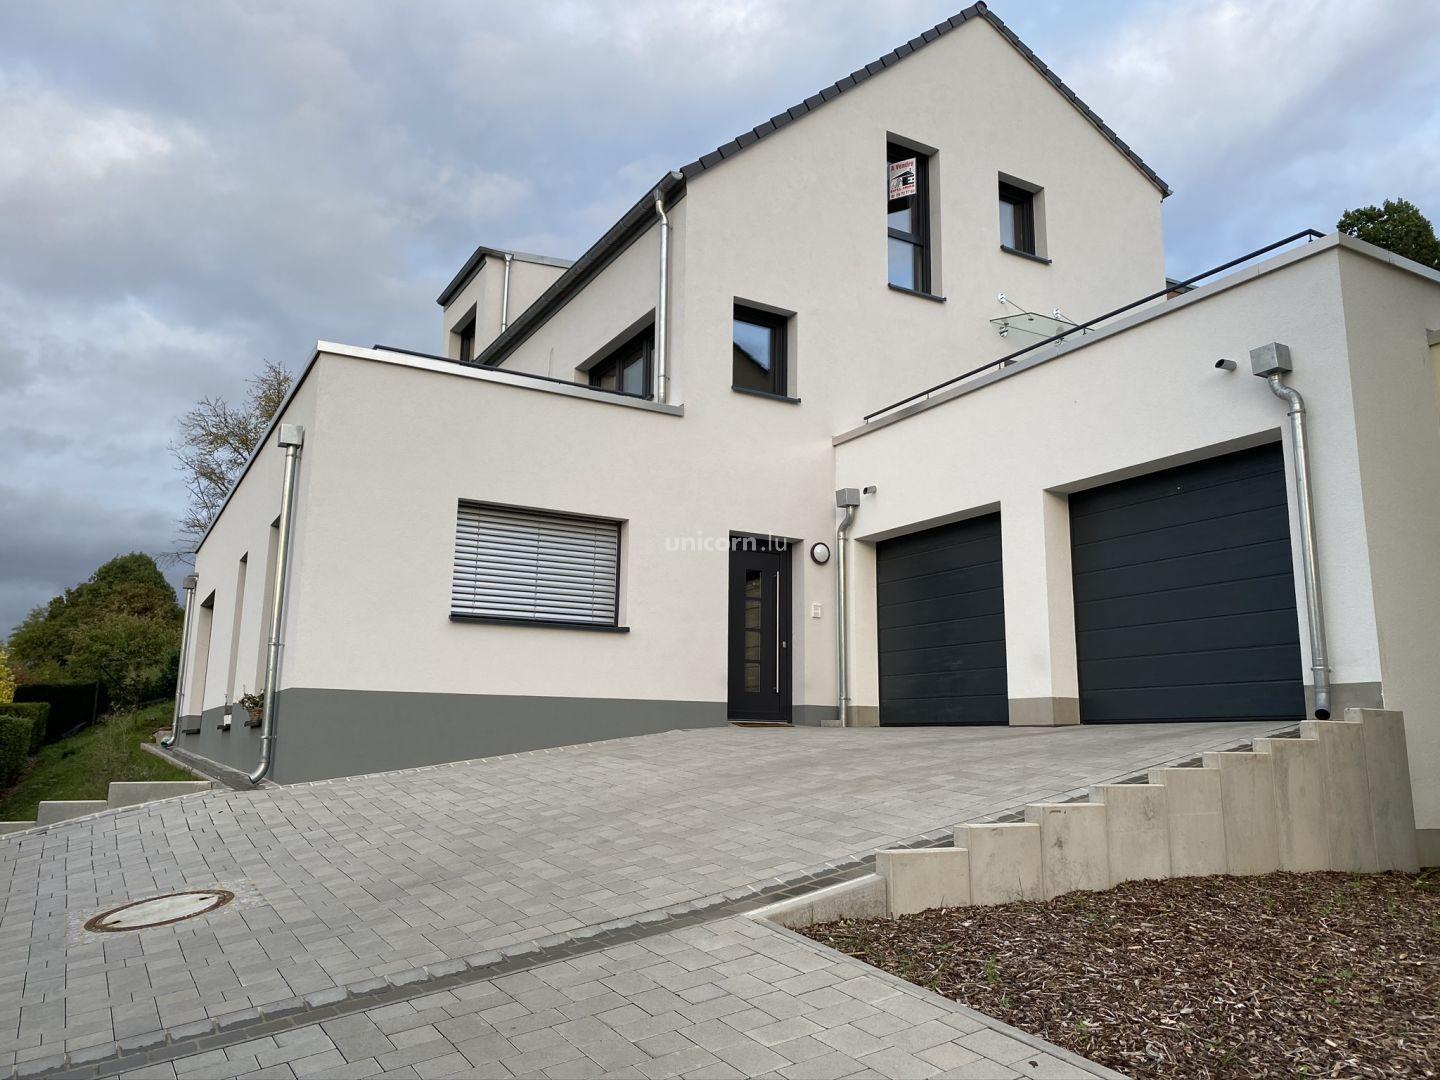 Apartment for sale in Echternach  - 153m²